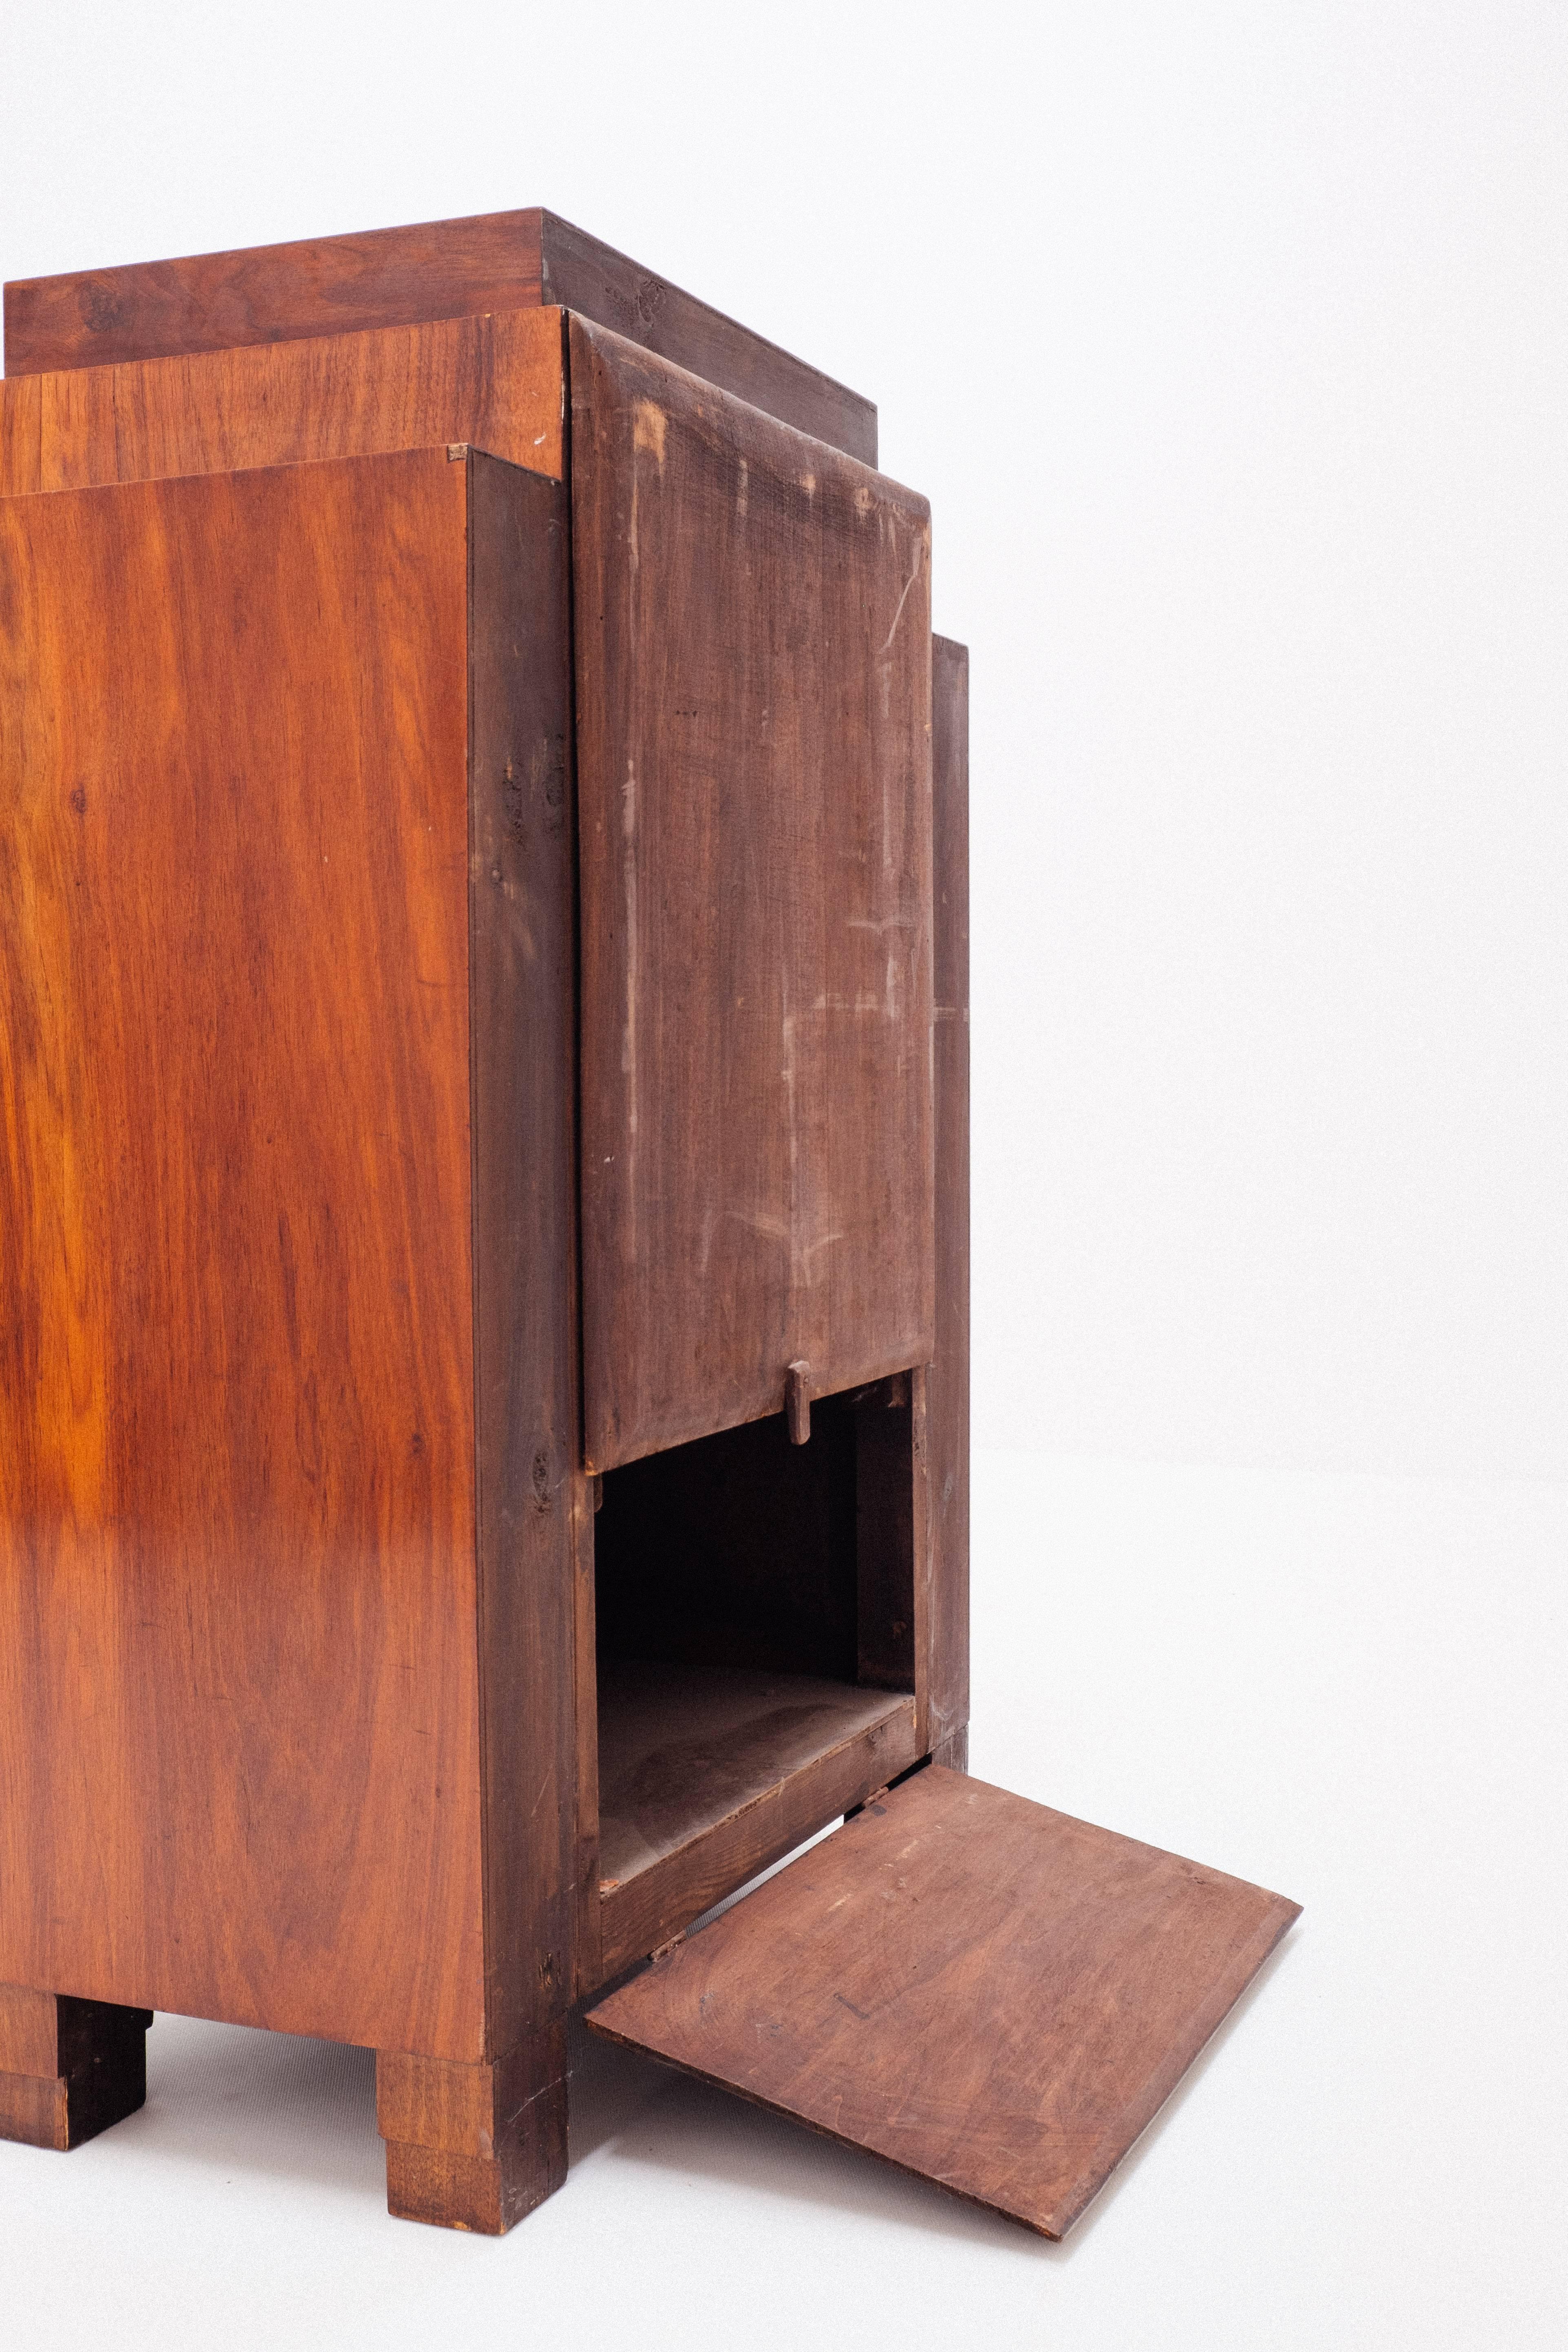 1920 Art Deco / Modernist Architectural Bar Cabinet 1